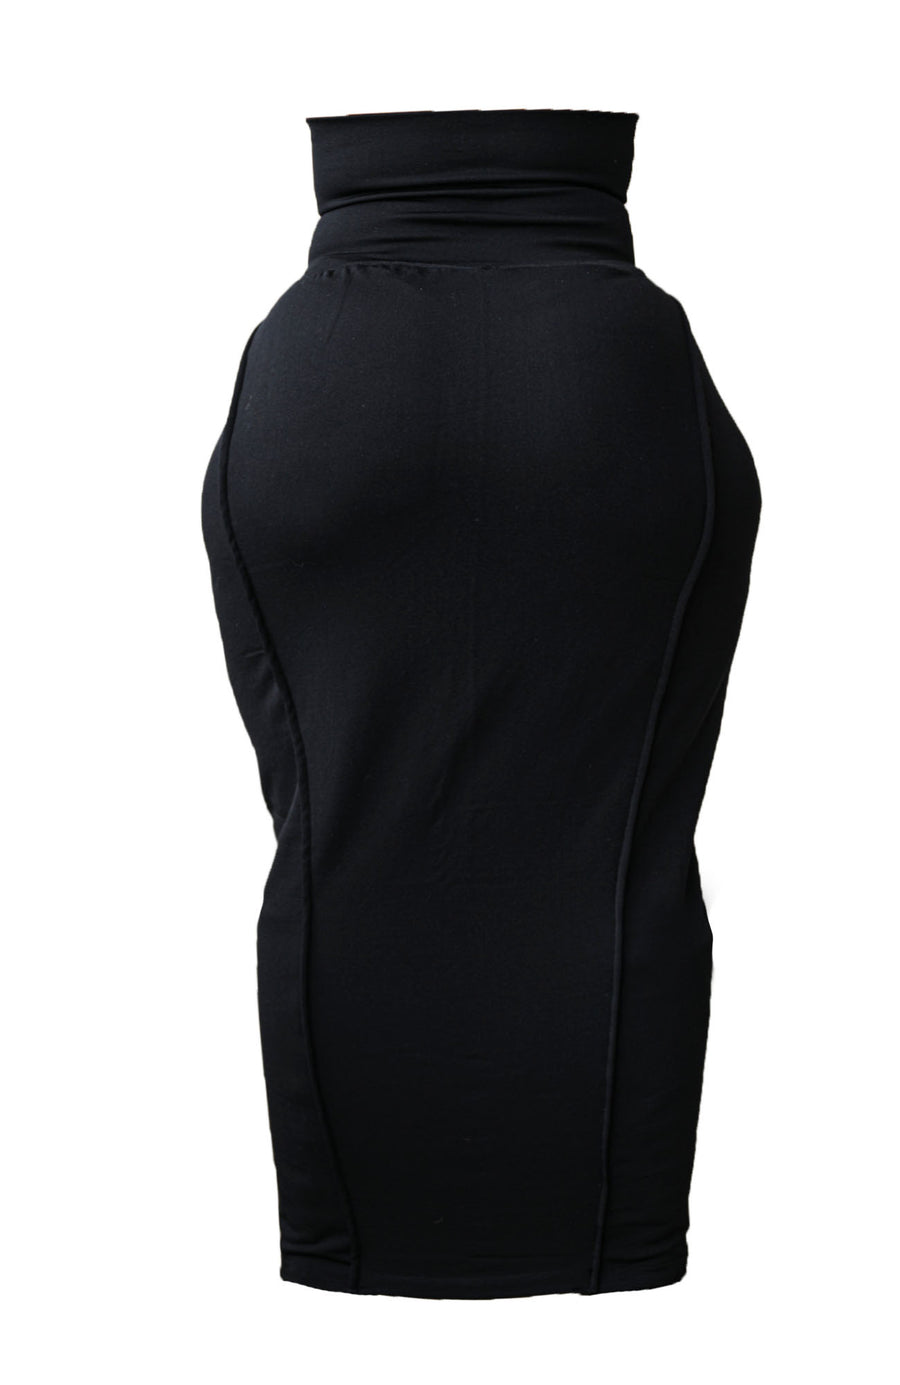 The Tummy Control Skirt (black) ♺